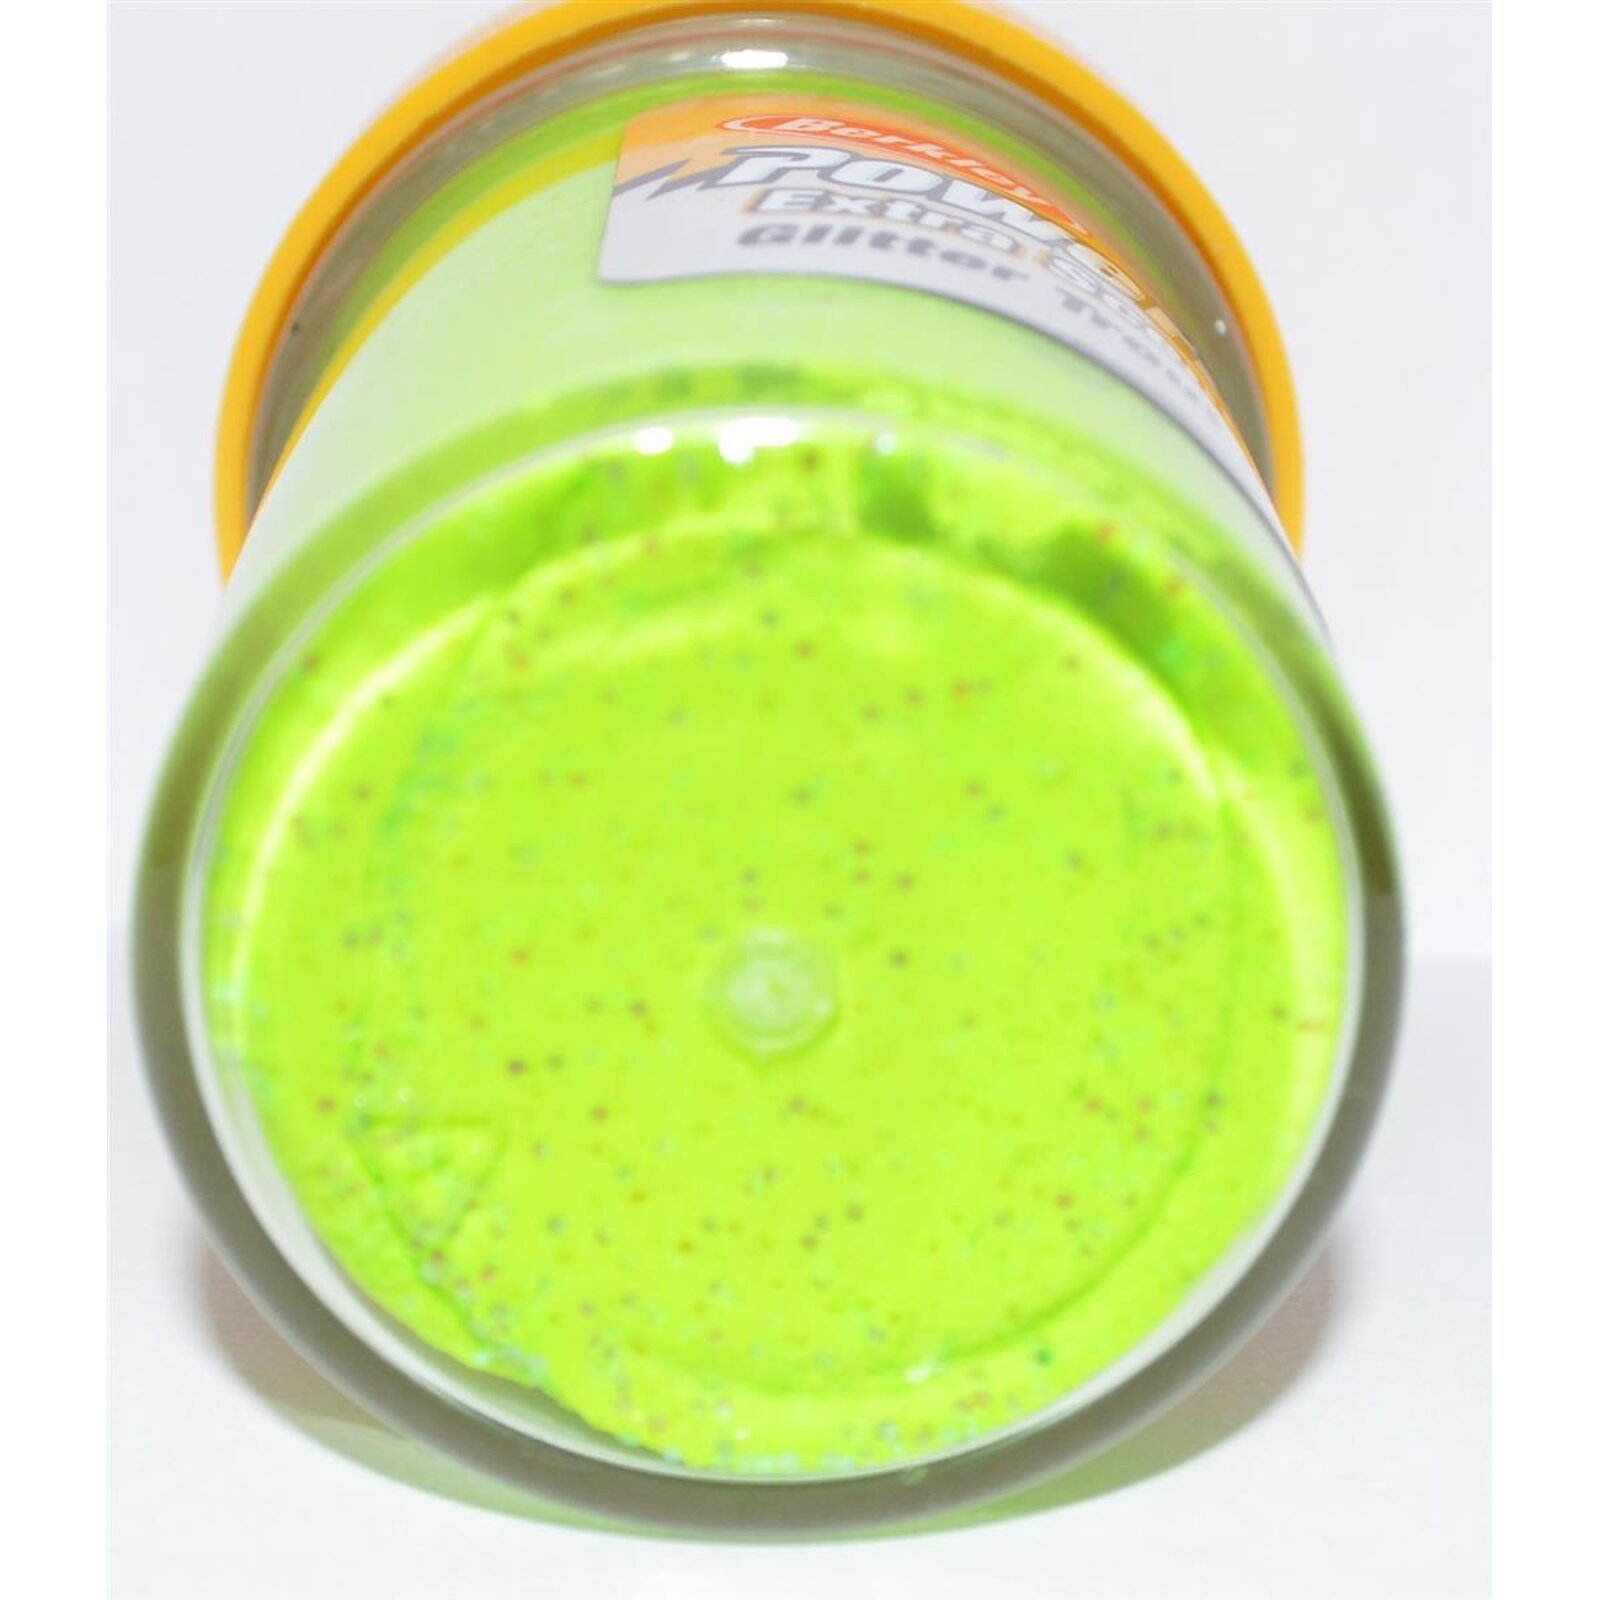 Berkley Trout Bait Glitter Chartreuse Knoblauch - 50g